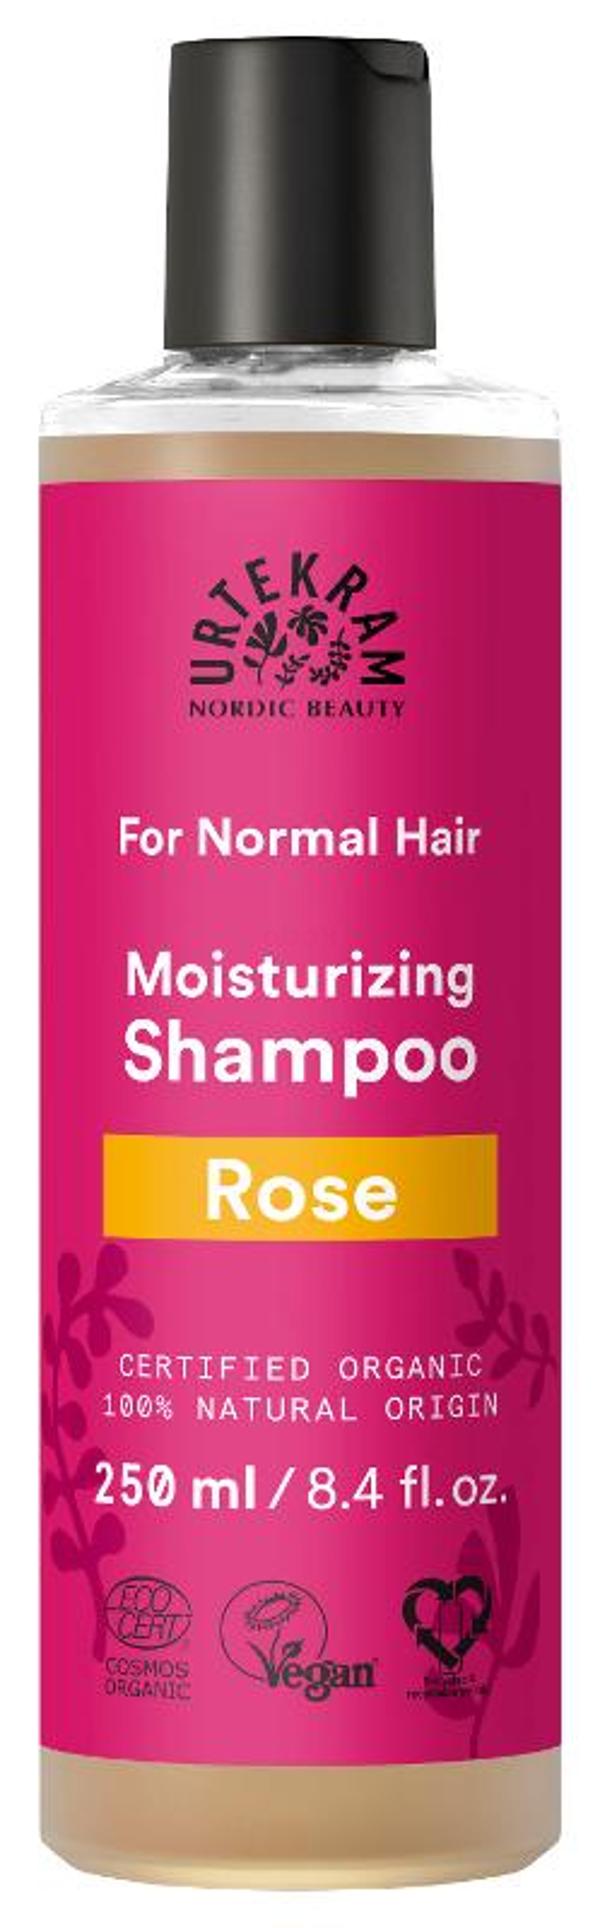 Produktfoto zu Moisturizing Shampoo Rose - 250ml